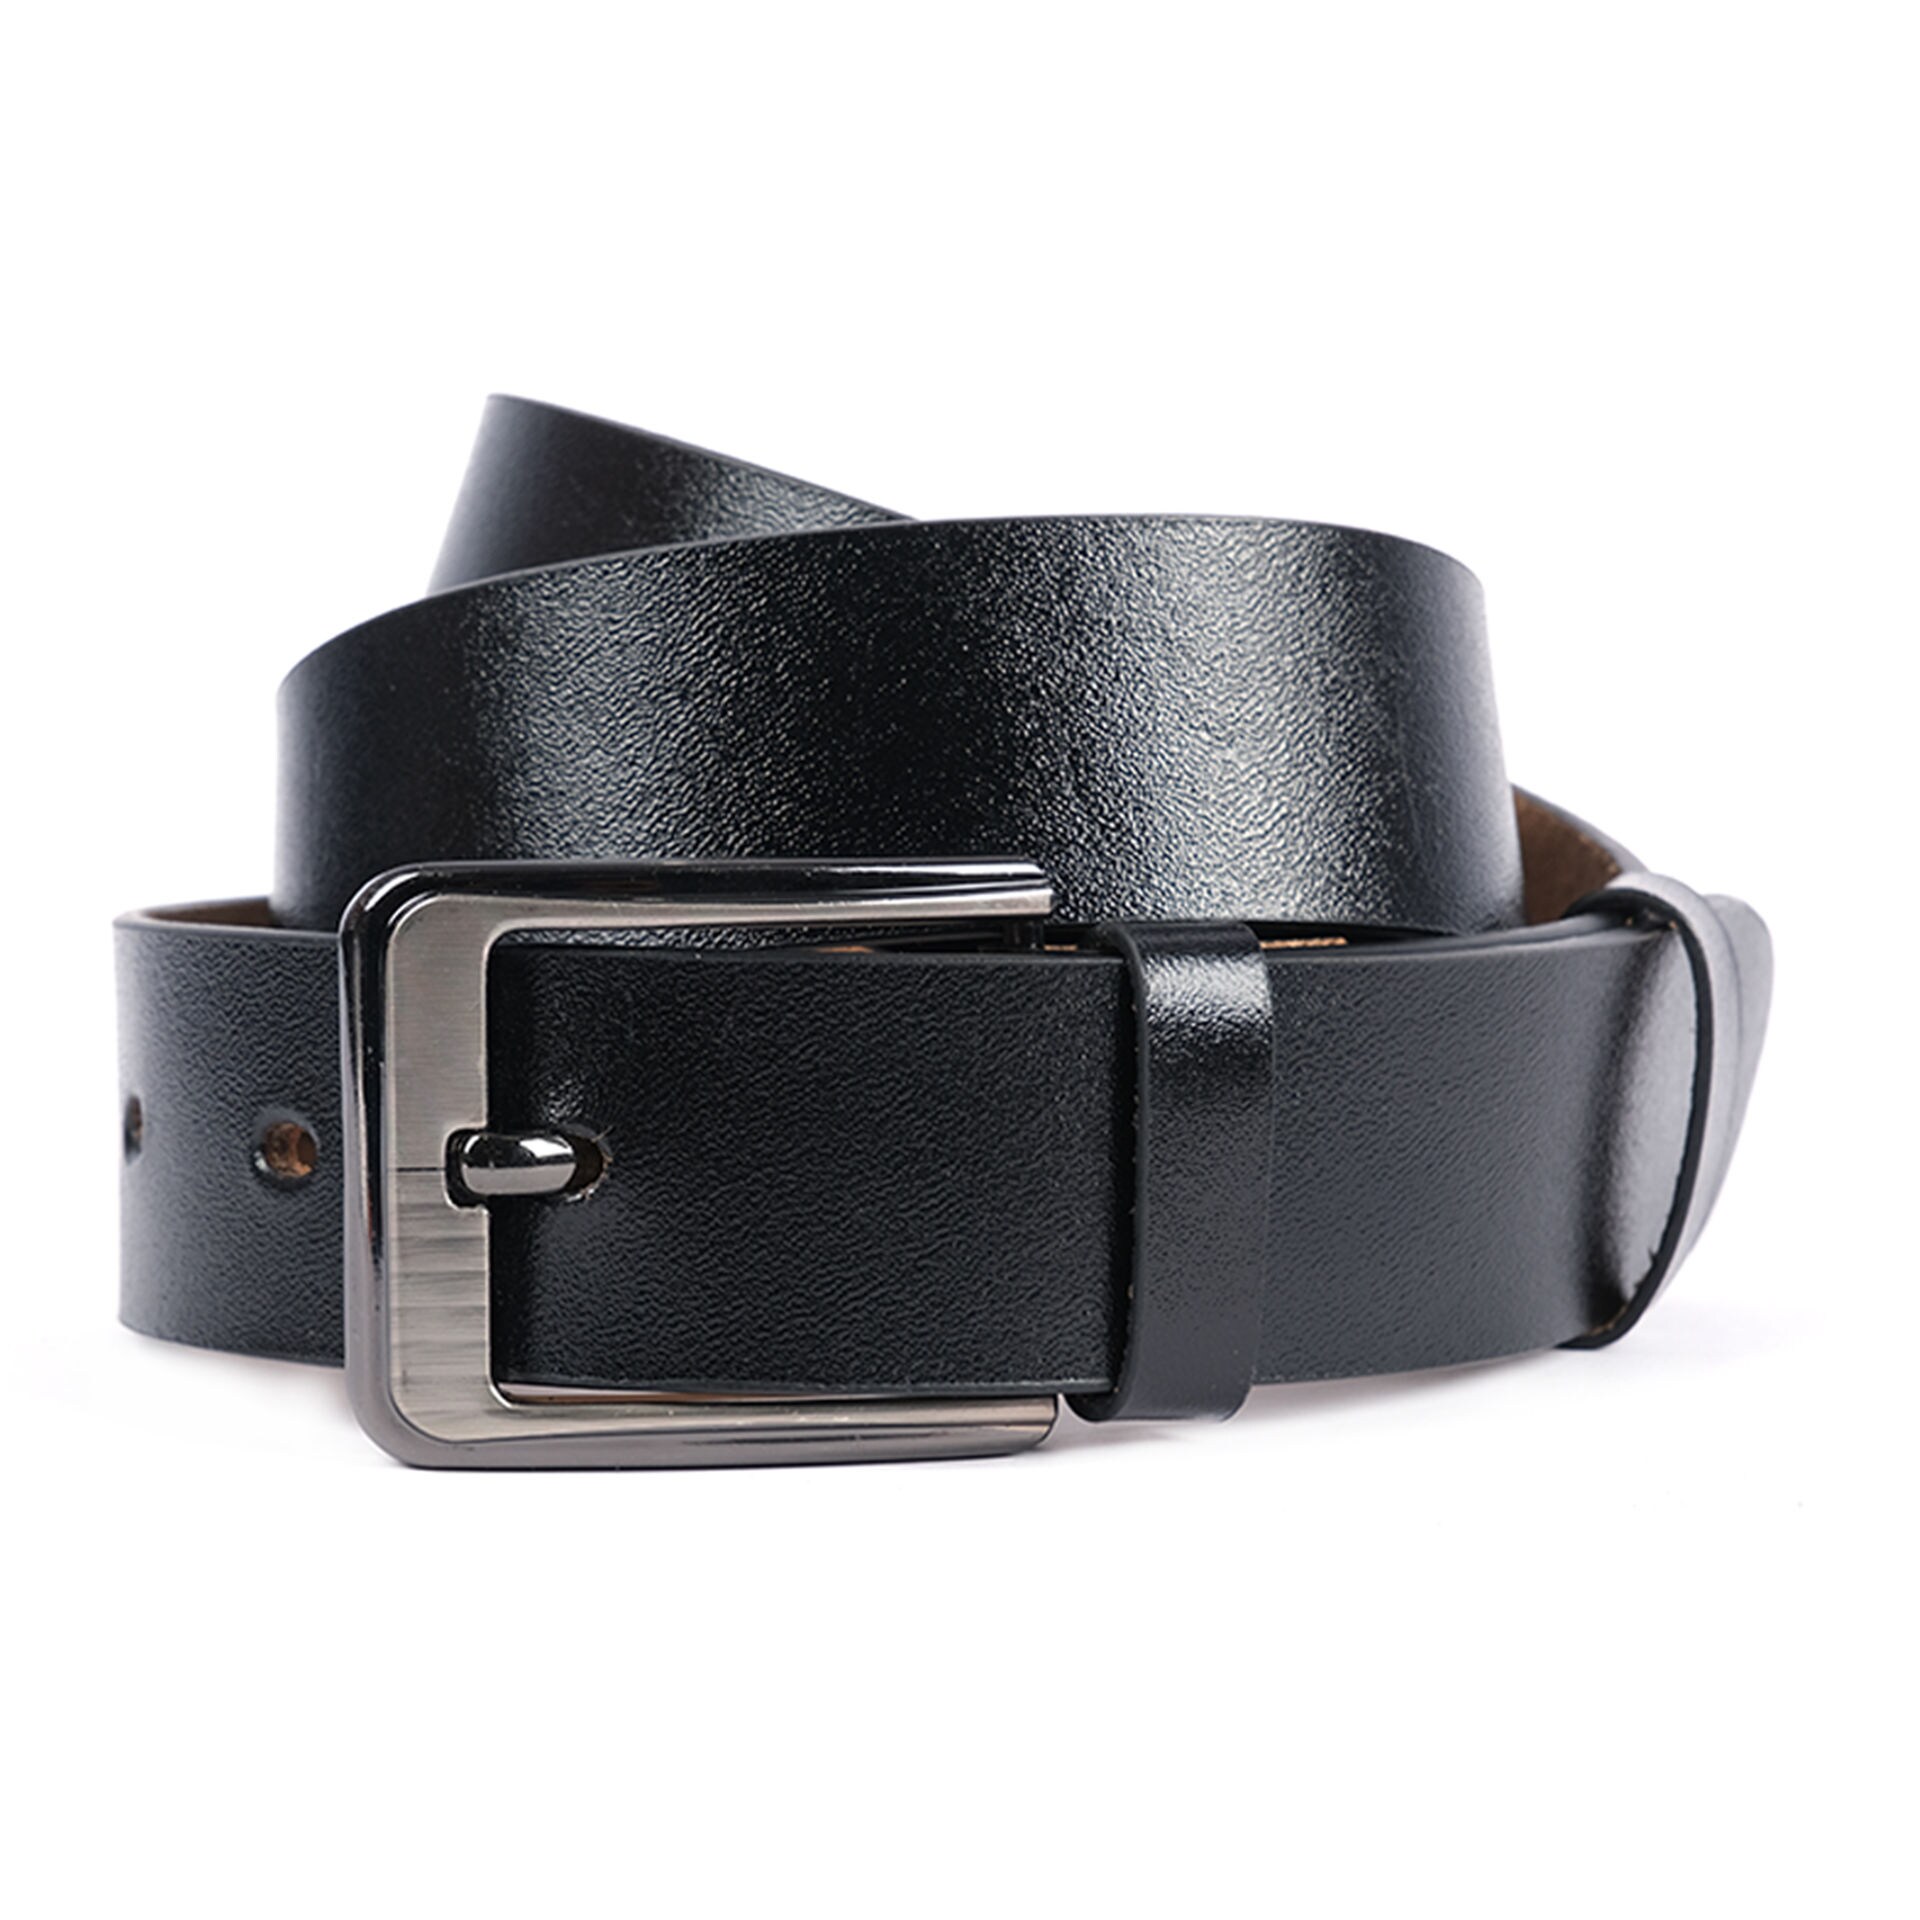 Shop Cool & Classy Men's Formal Belt with Hard Leather Black | Dragon ...